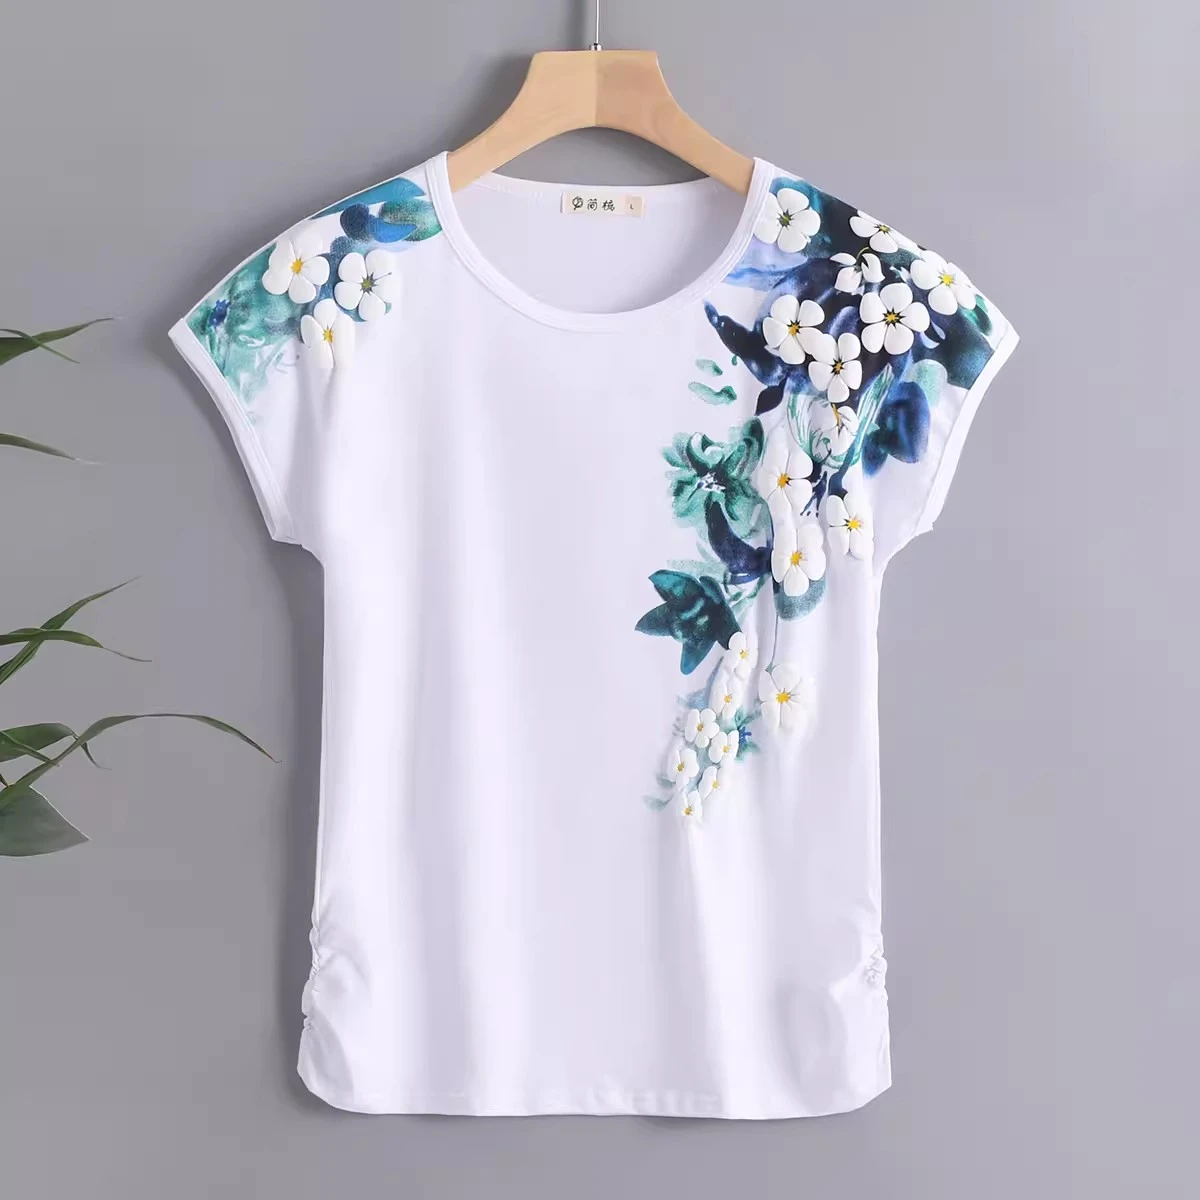 2021 new arrival cotton floral print t shirt women summer tops short sleeve graphic tees o-neck tshirt modis tee shirt femme